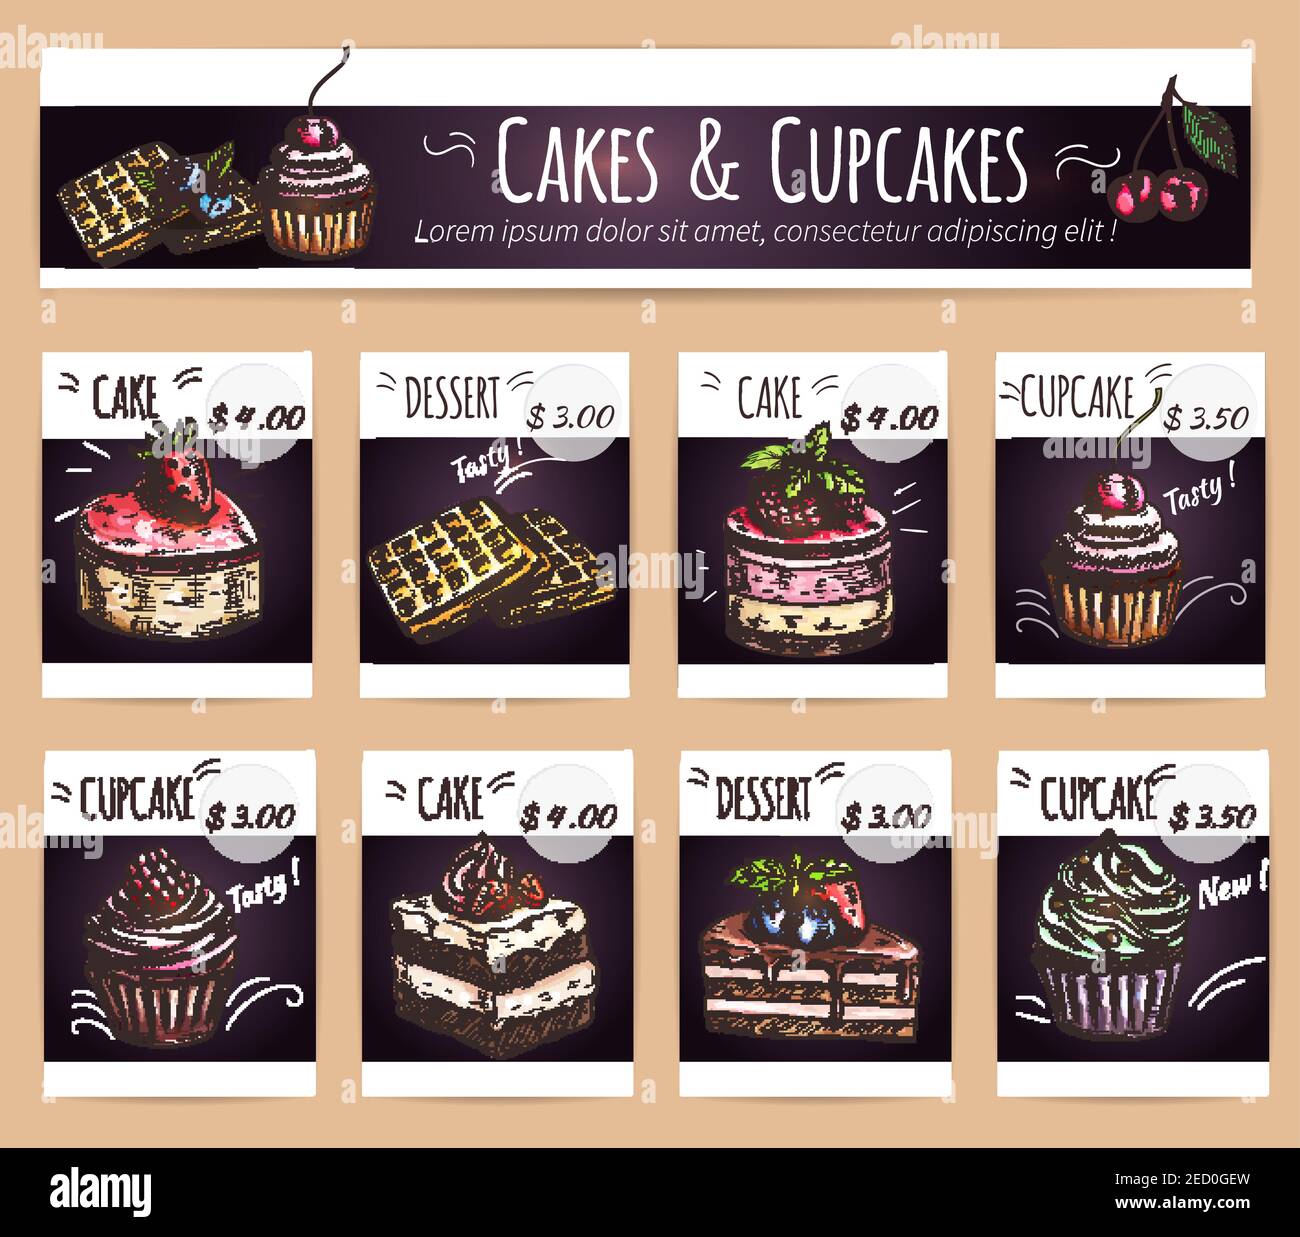 cake menu 2 by Azgor turad on Dribbble